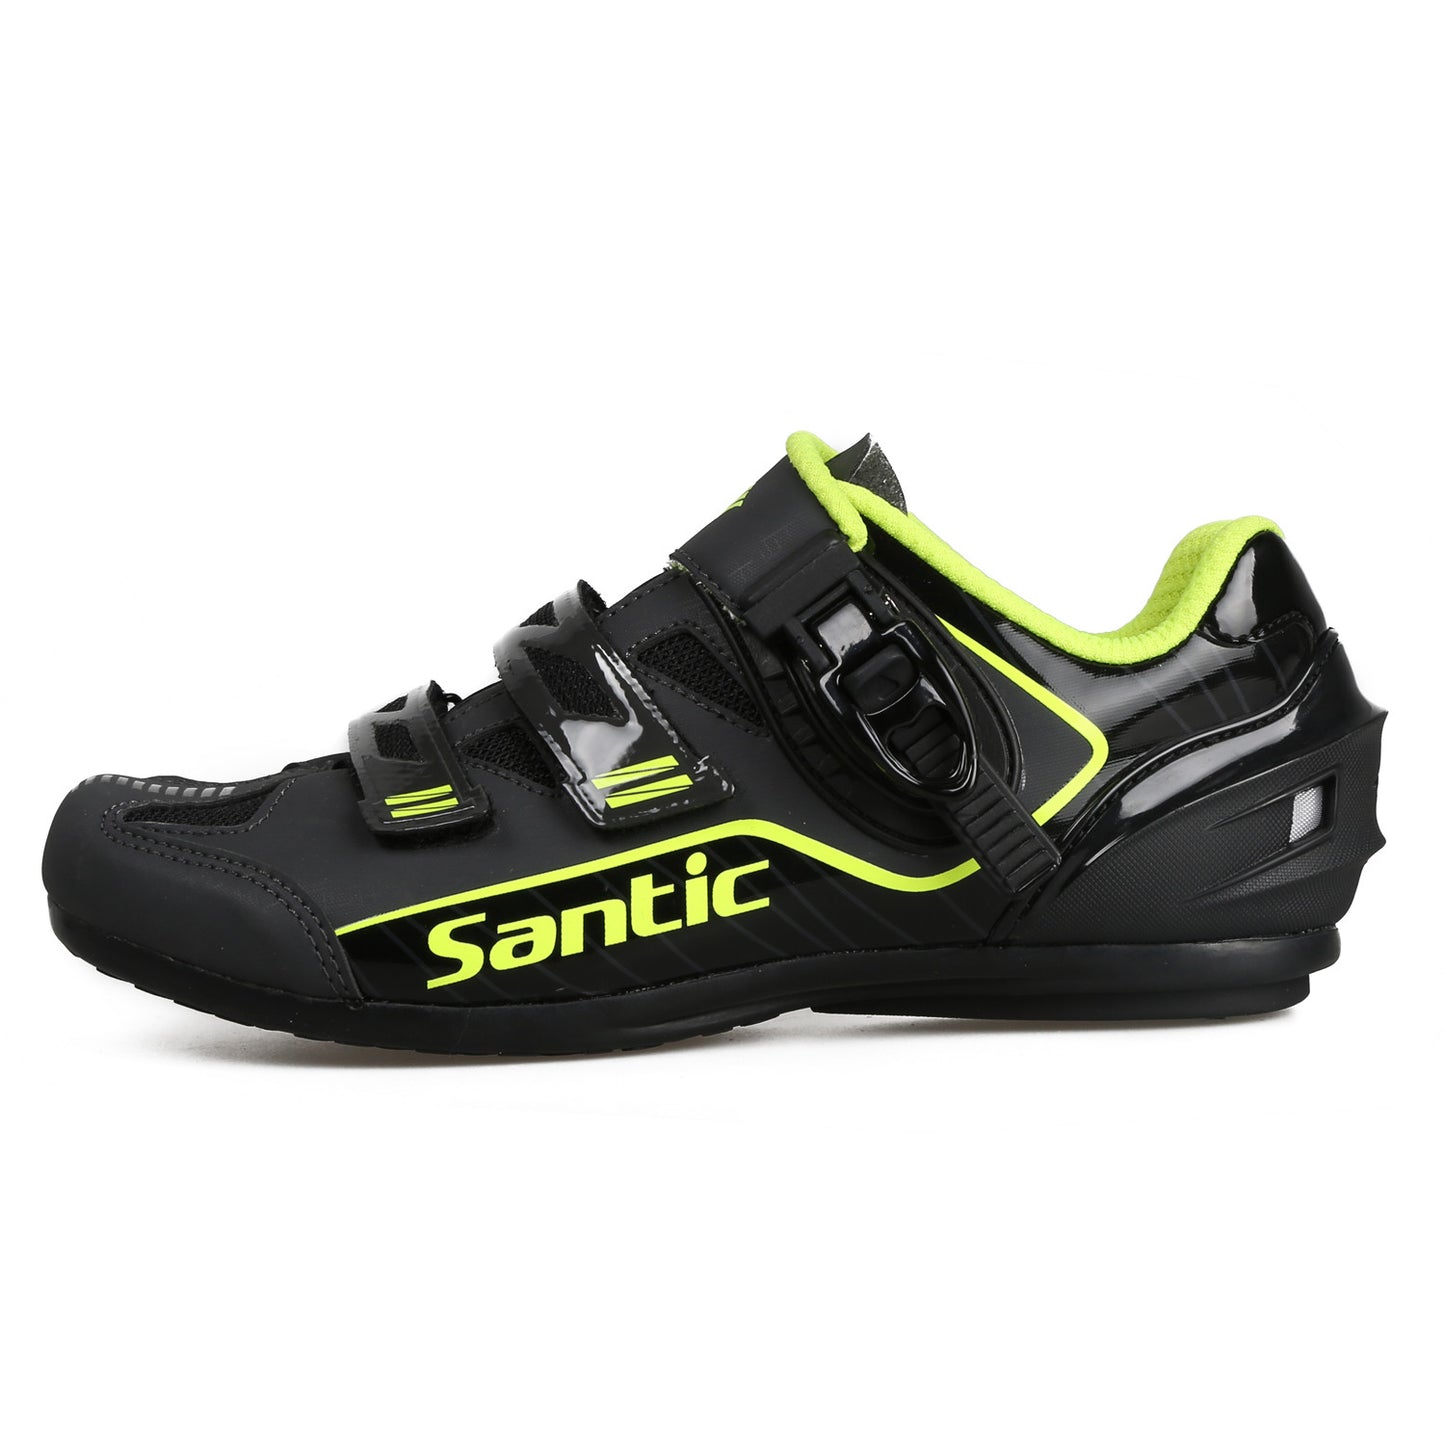 Santic Caribbean Gray Men Road MTB Cycling Shoes Bike Cleats not Compatible